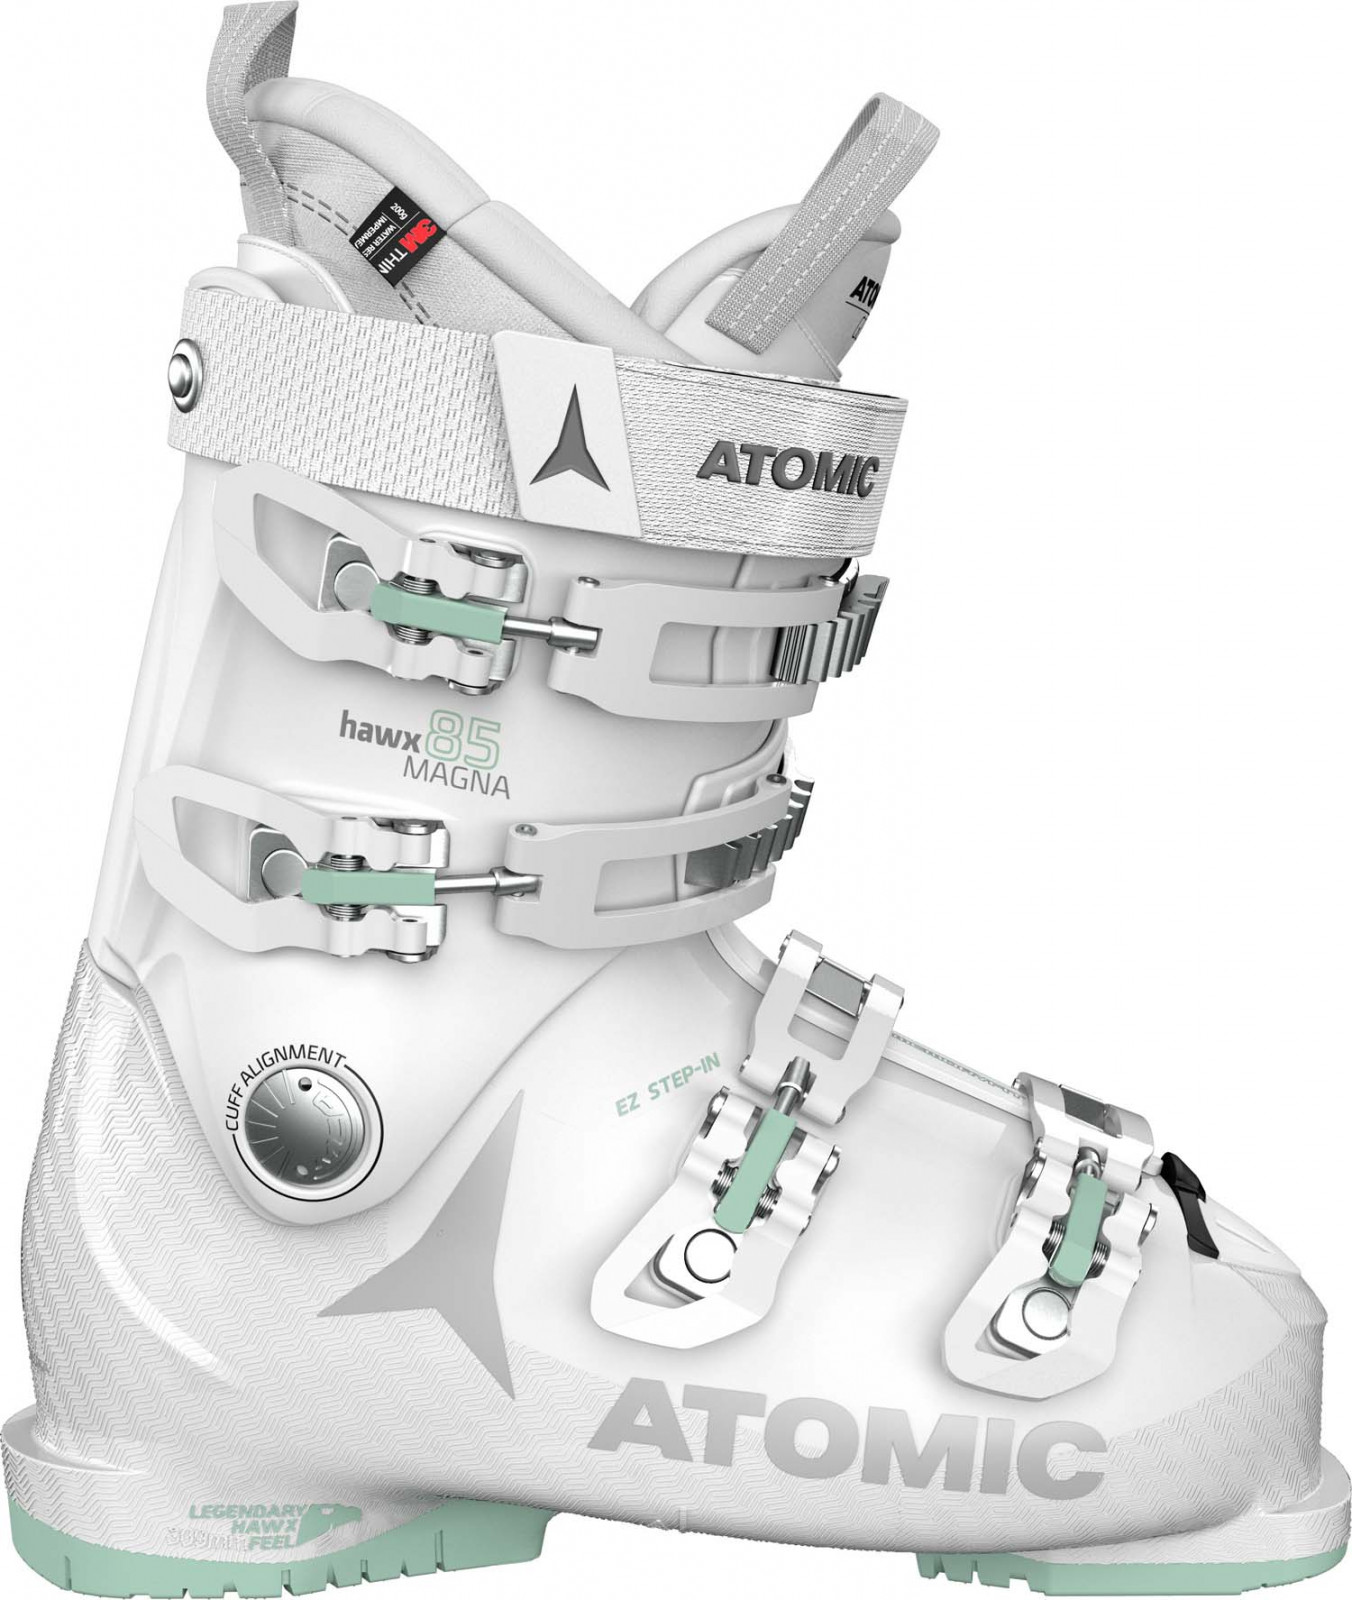 static Malfunction Pinion Dámské lyžařské boty Atomic Hawx Magna 85 W AE5023000 White/Mint 21/22 -  Skladem, v akci | P-sport.cz